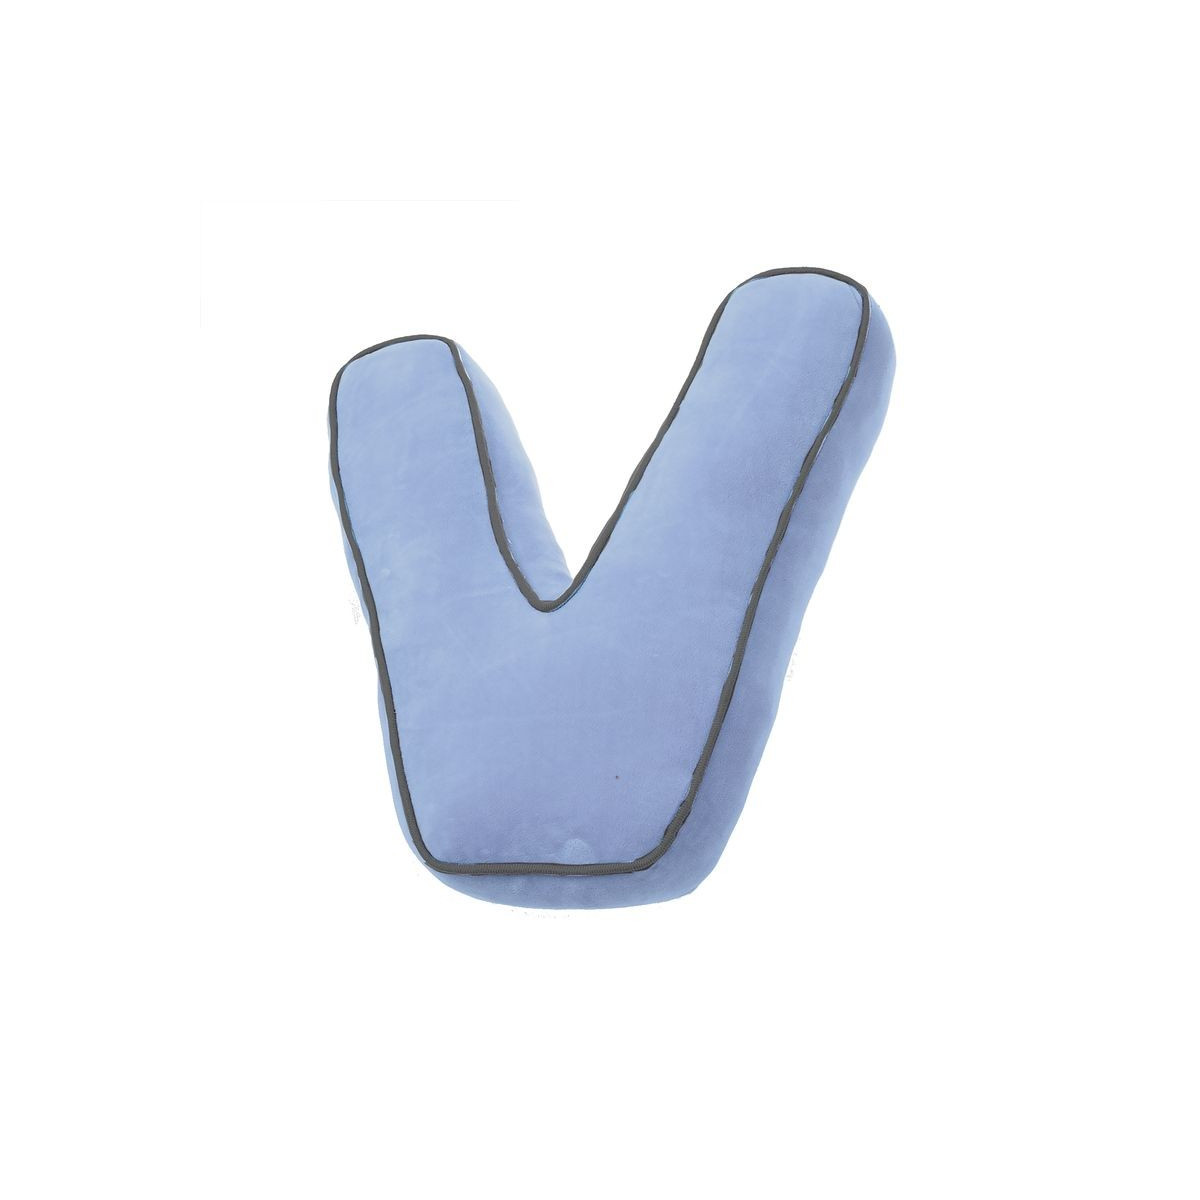 Cuscino a forma di lettera v blu